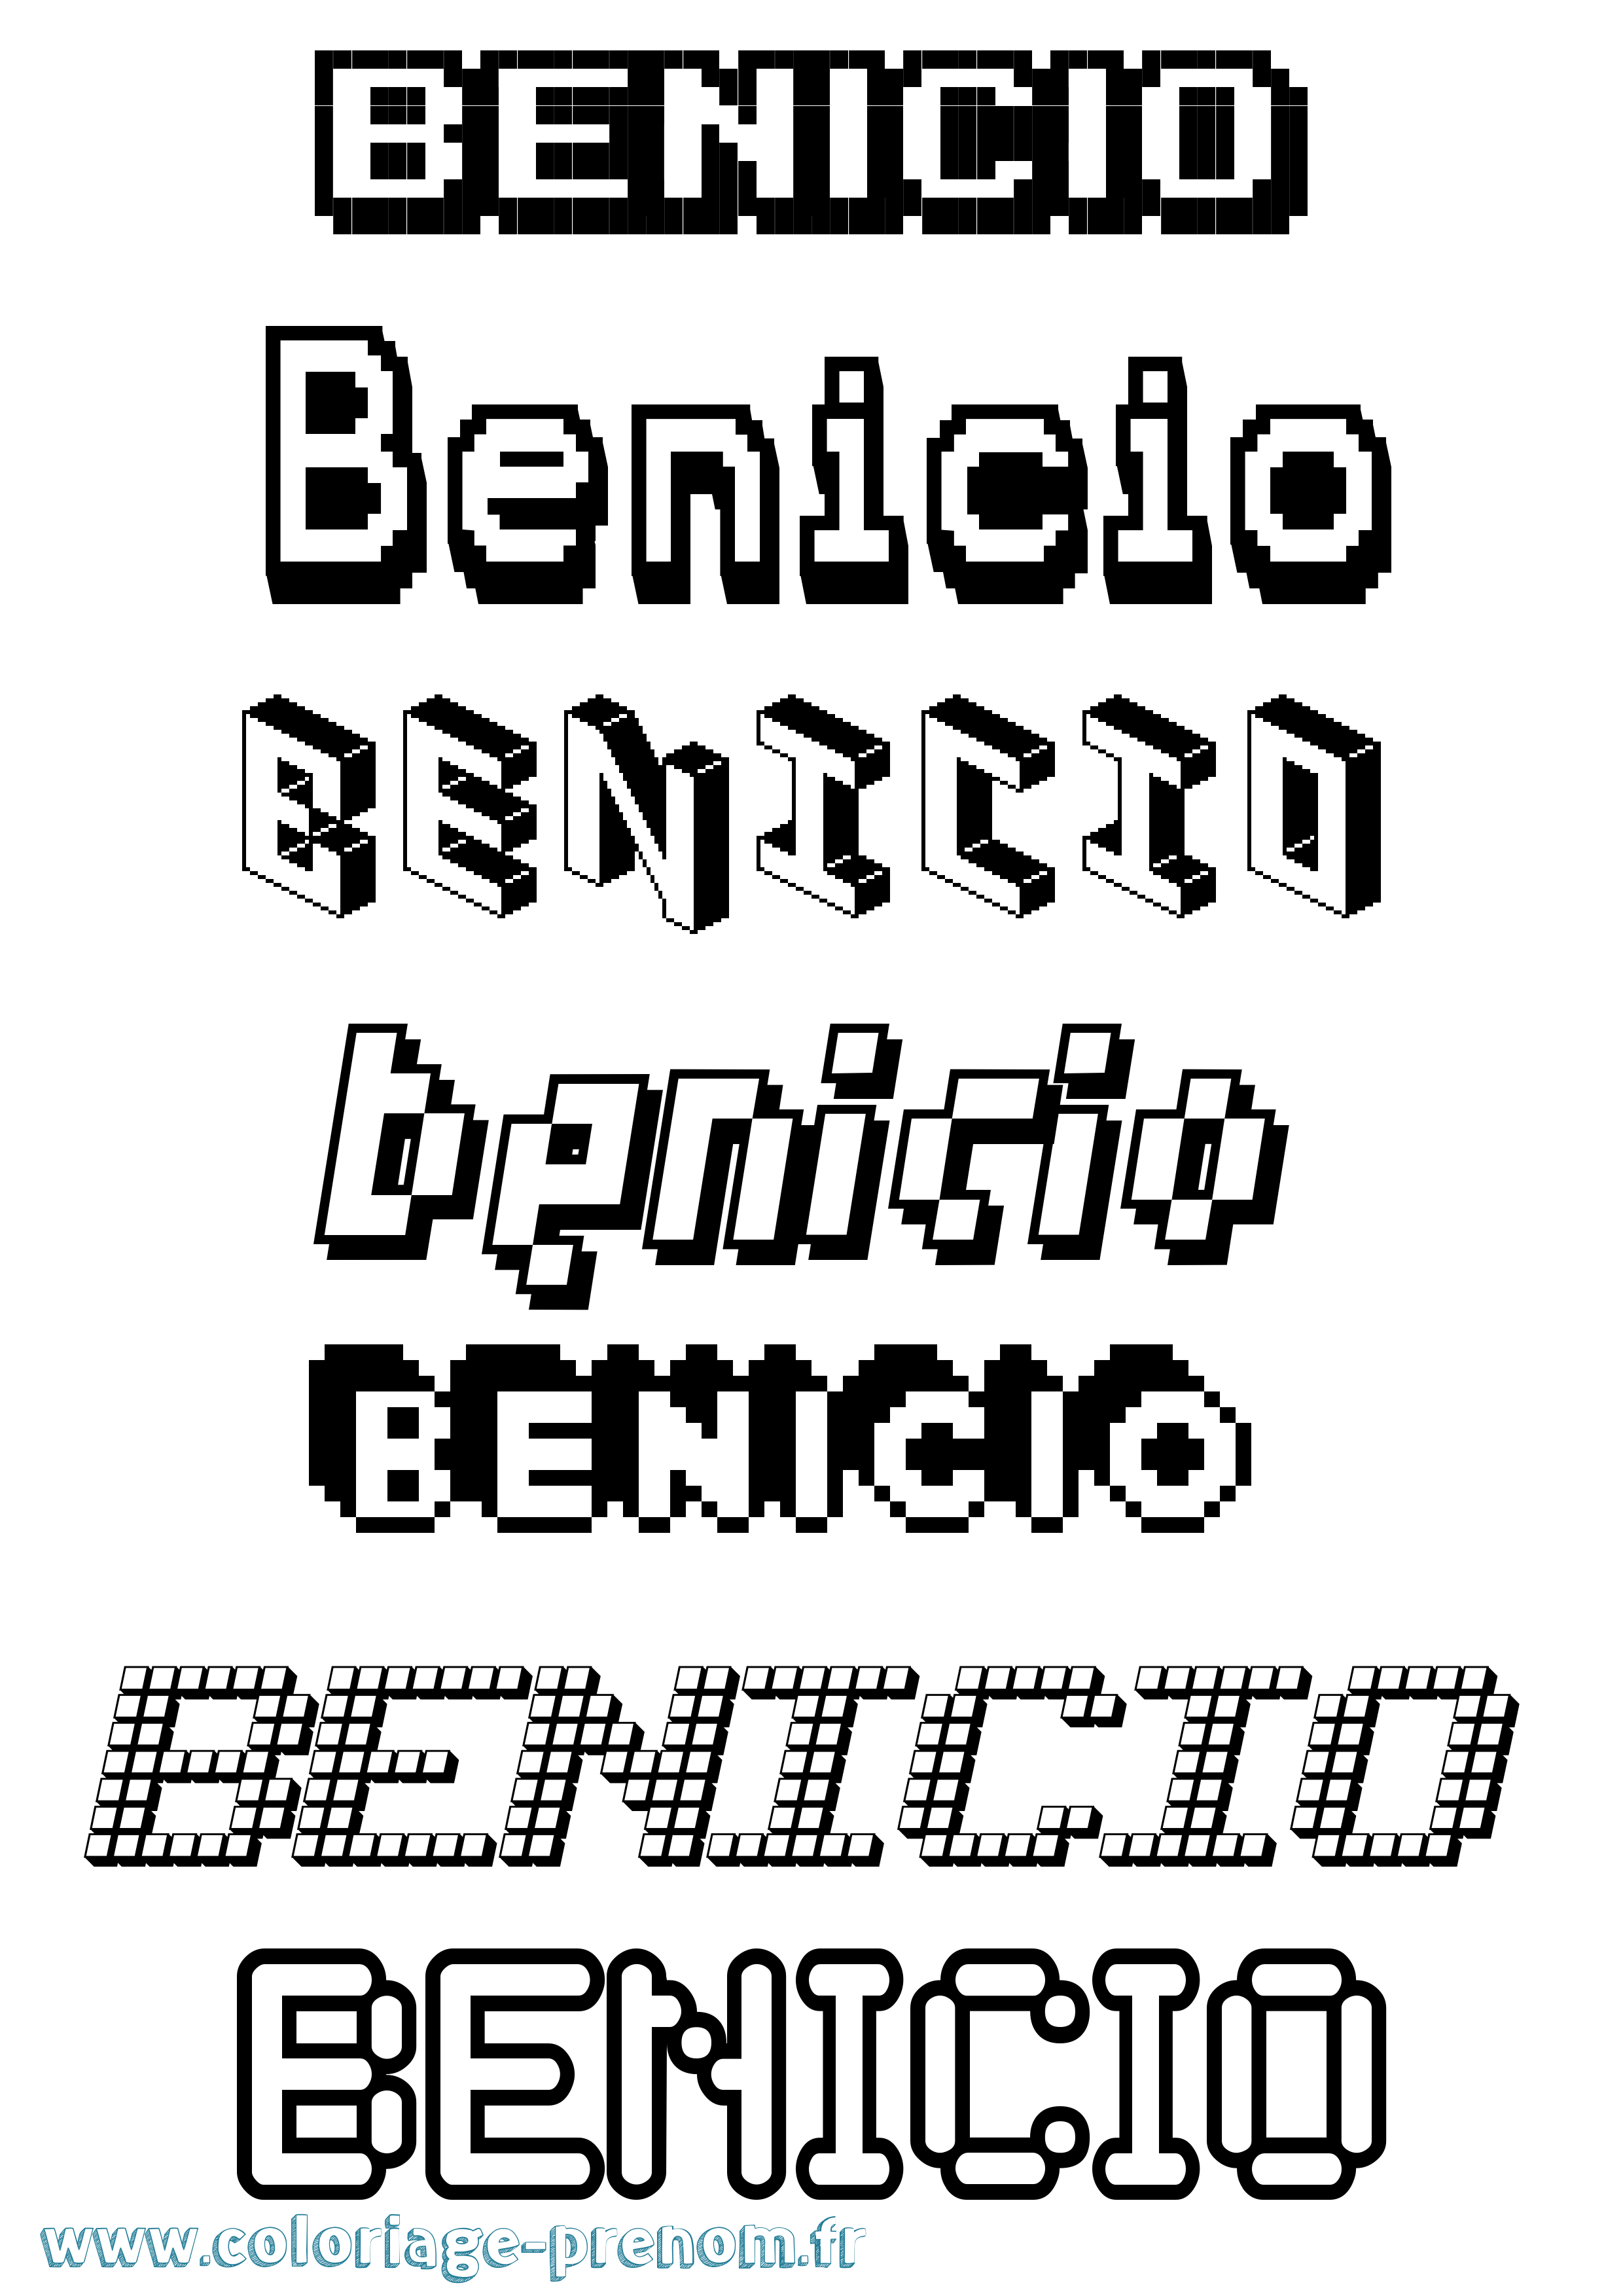 Coloriage prénom Benicio Pixel